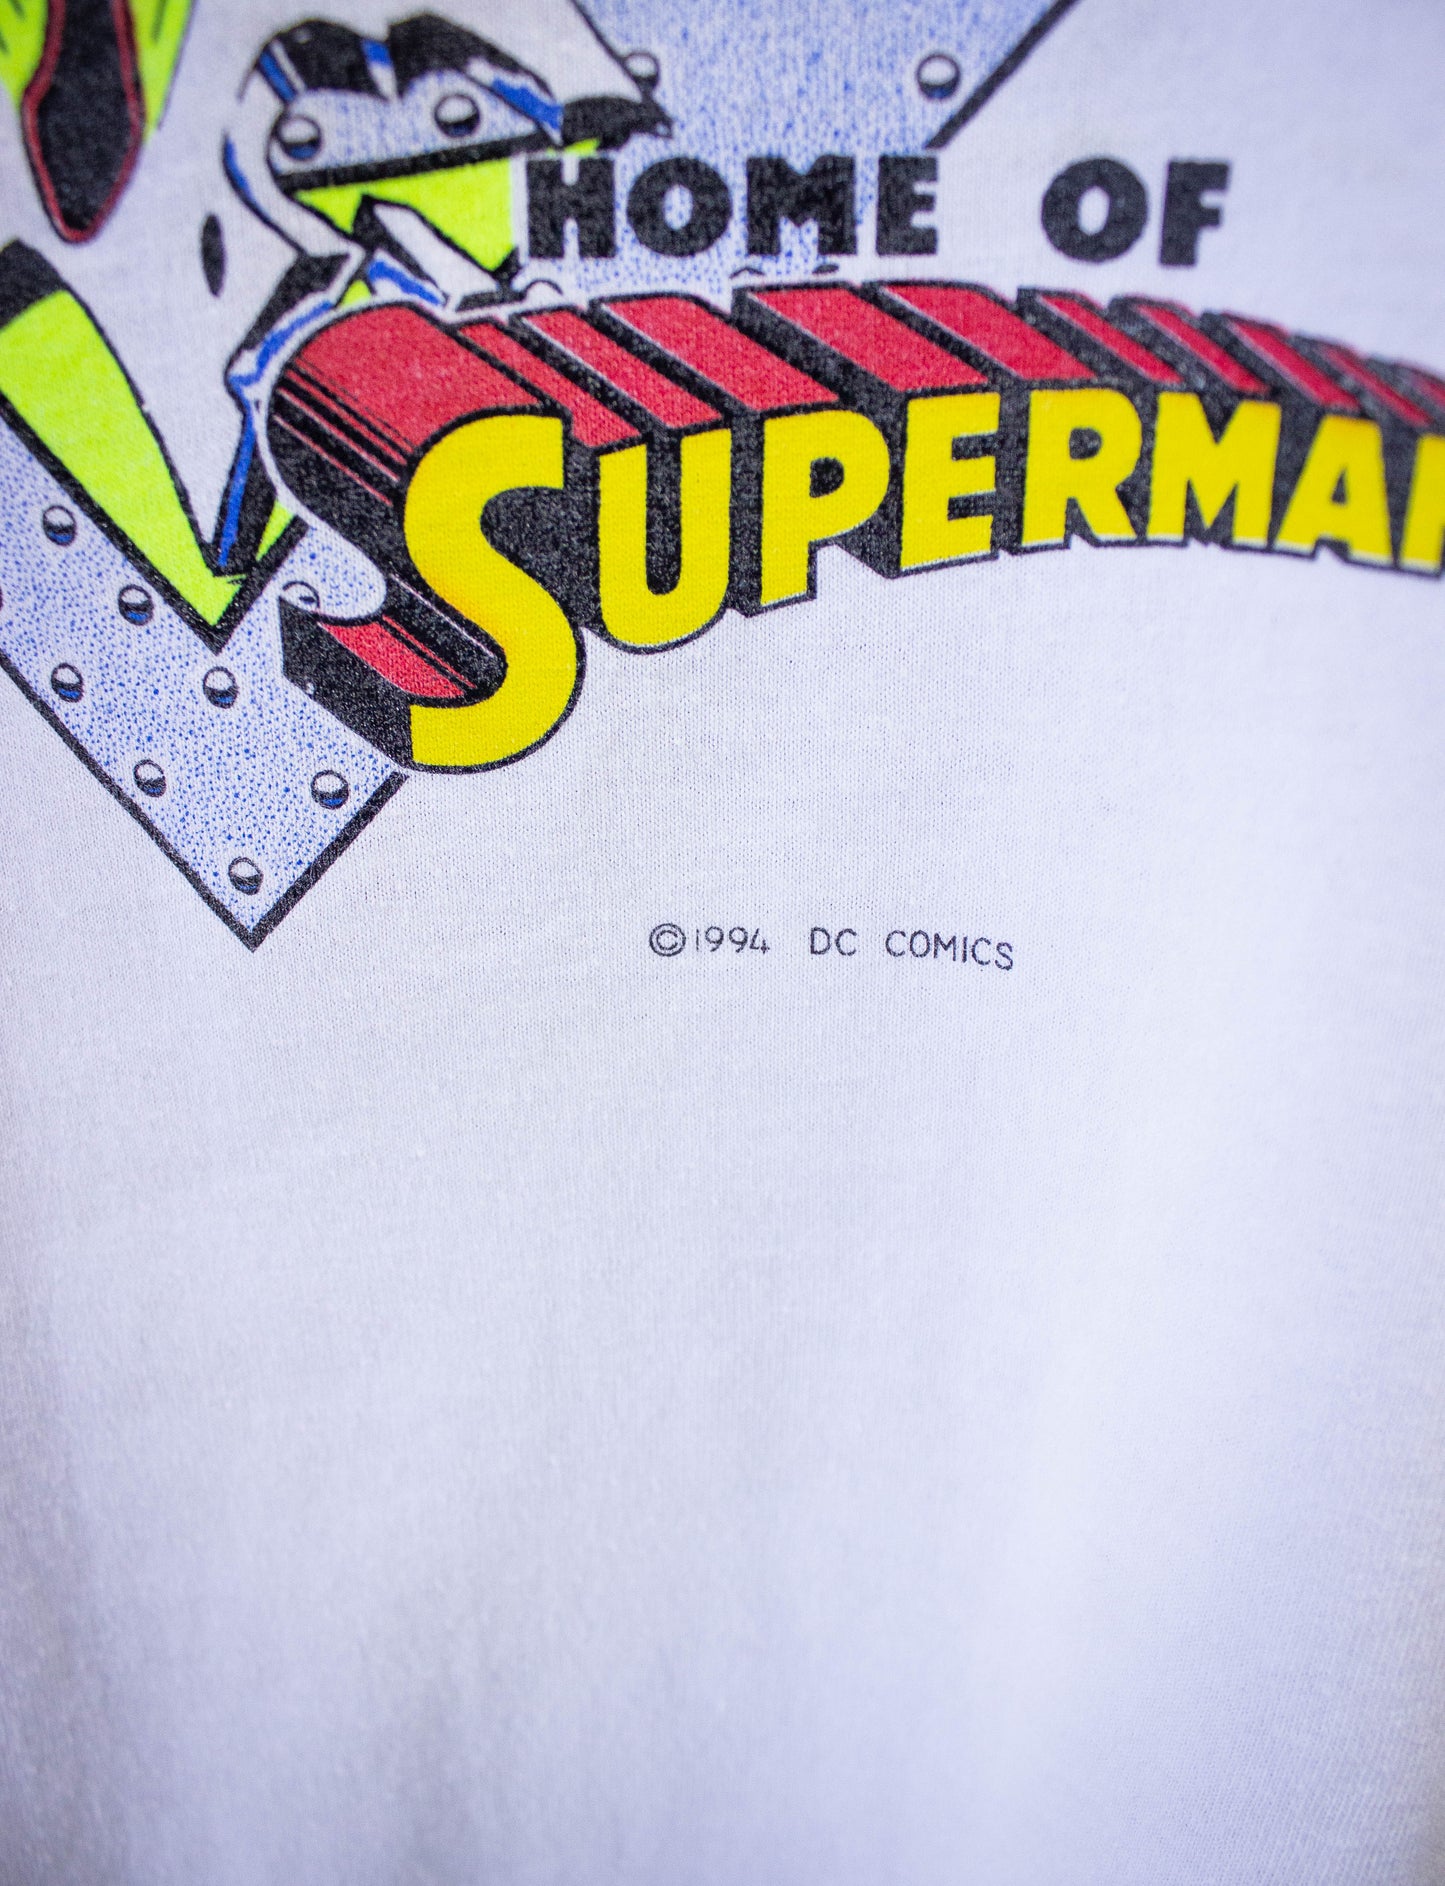 Vintage Superman Metropolis Illinois Graphic T-Shirt 1994 XL